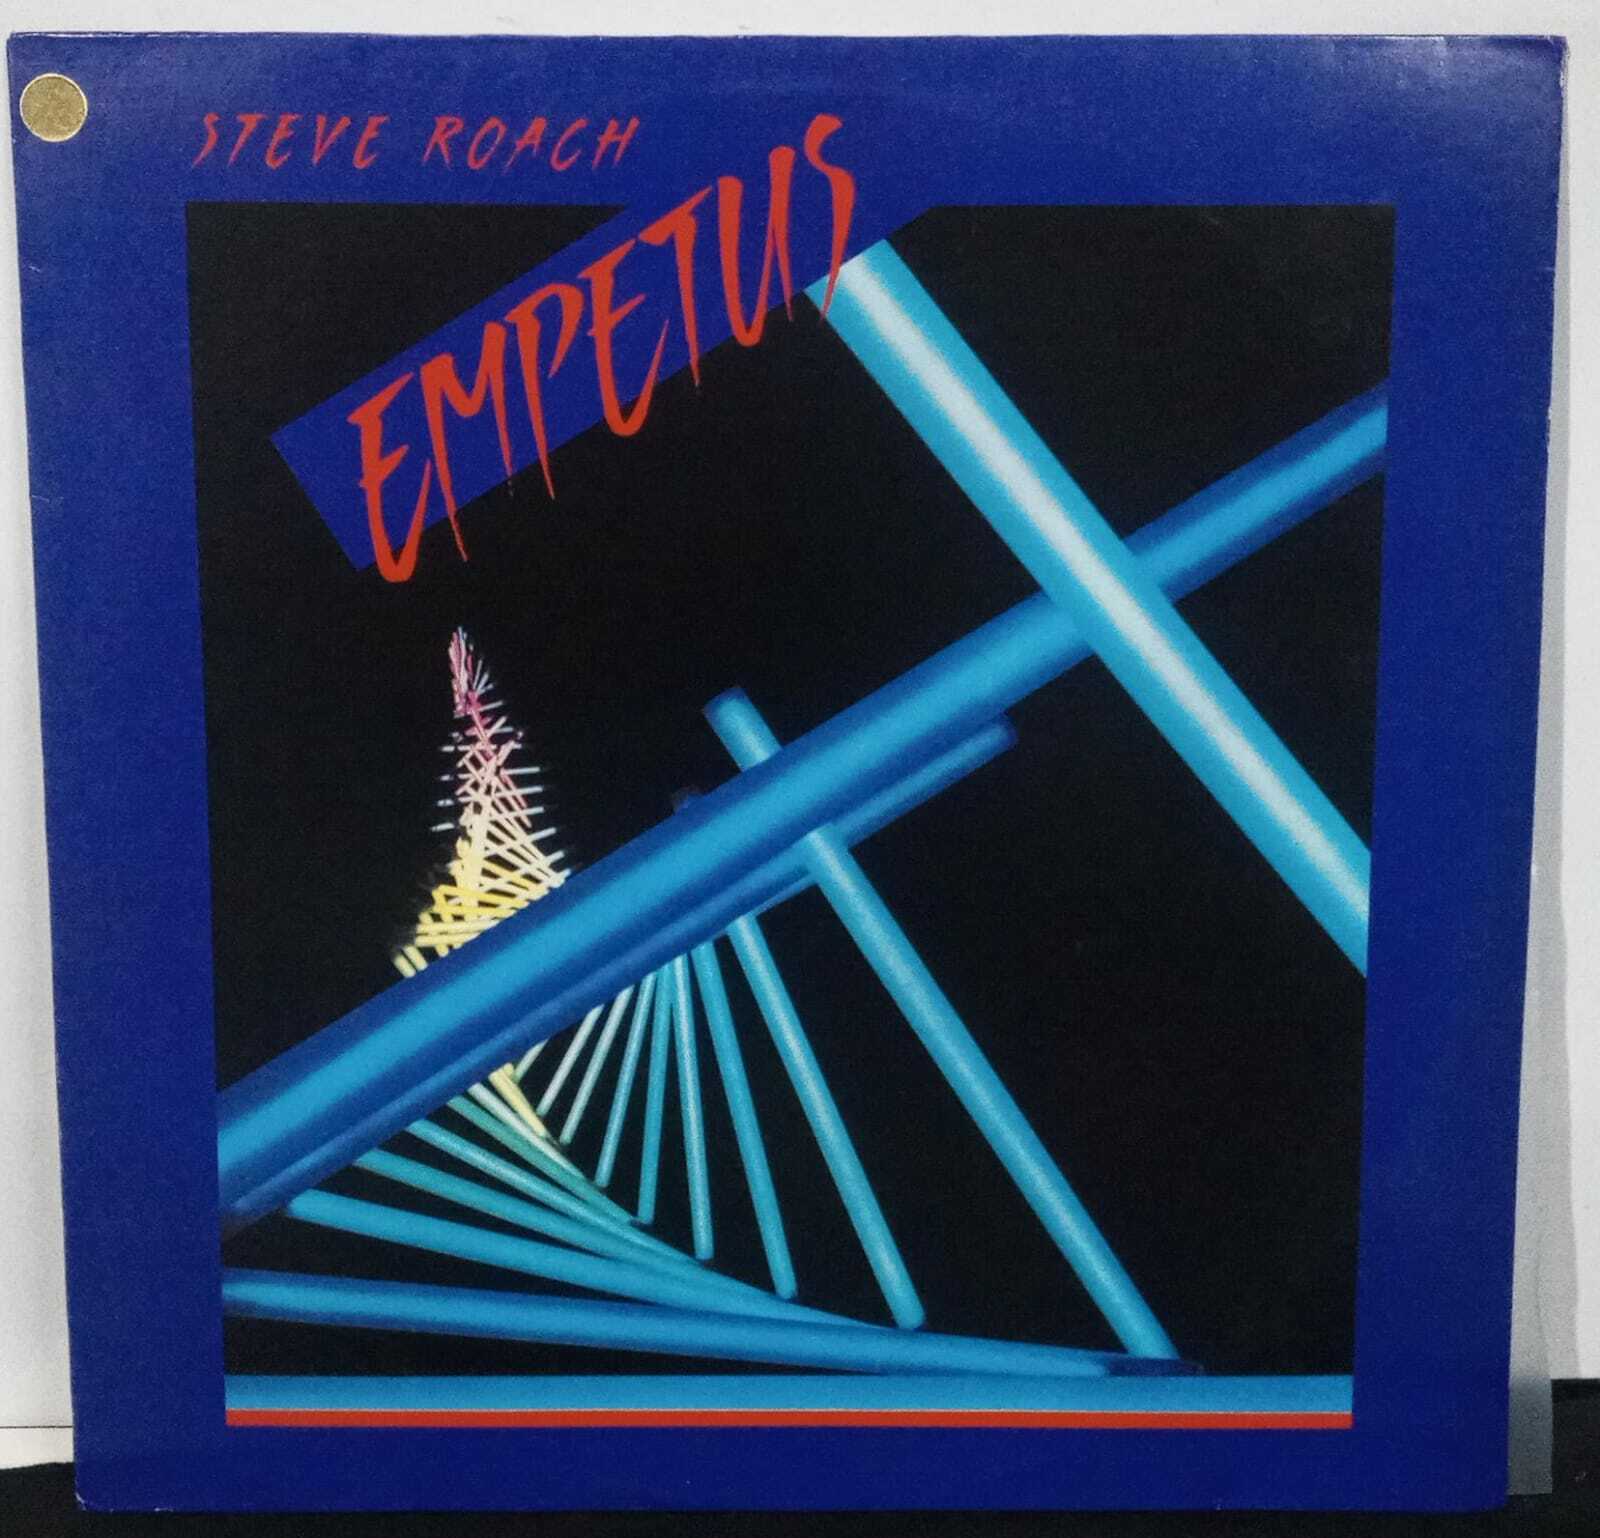 Vinil - Steve Roach - Empetus